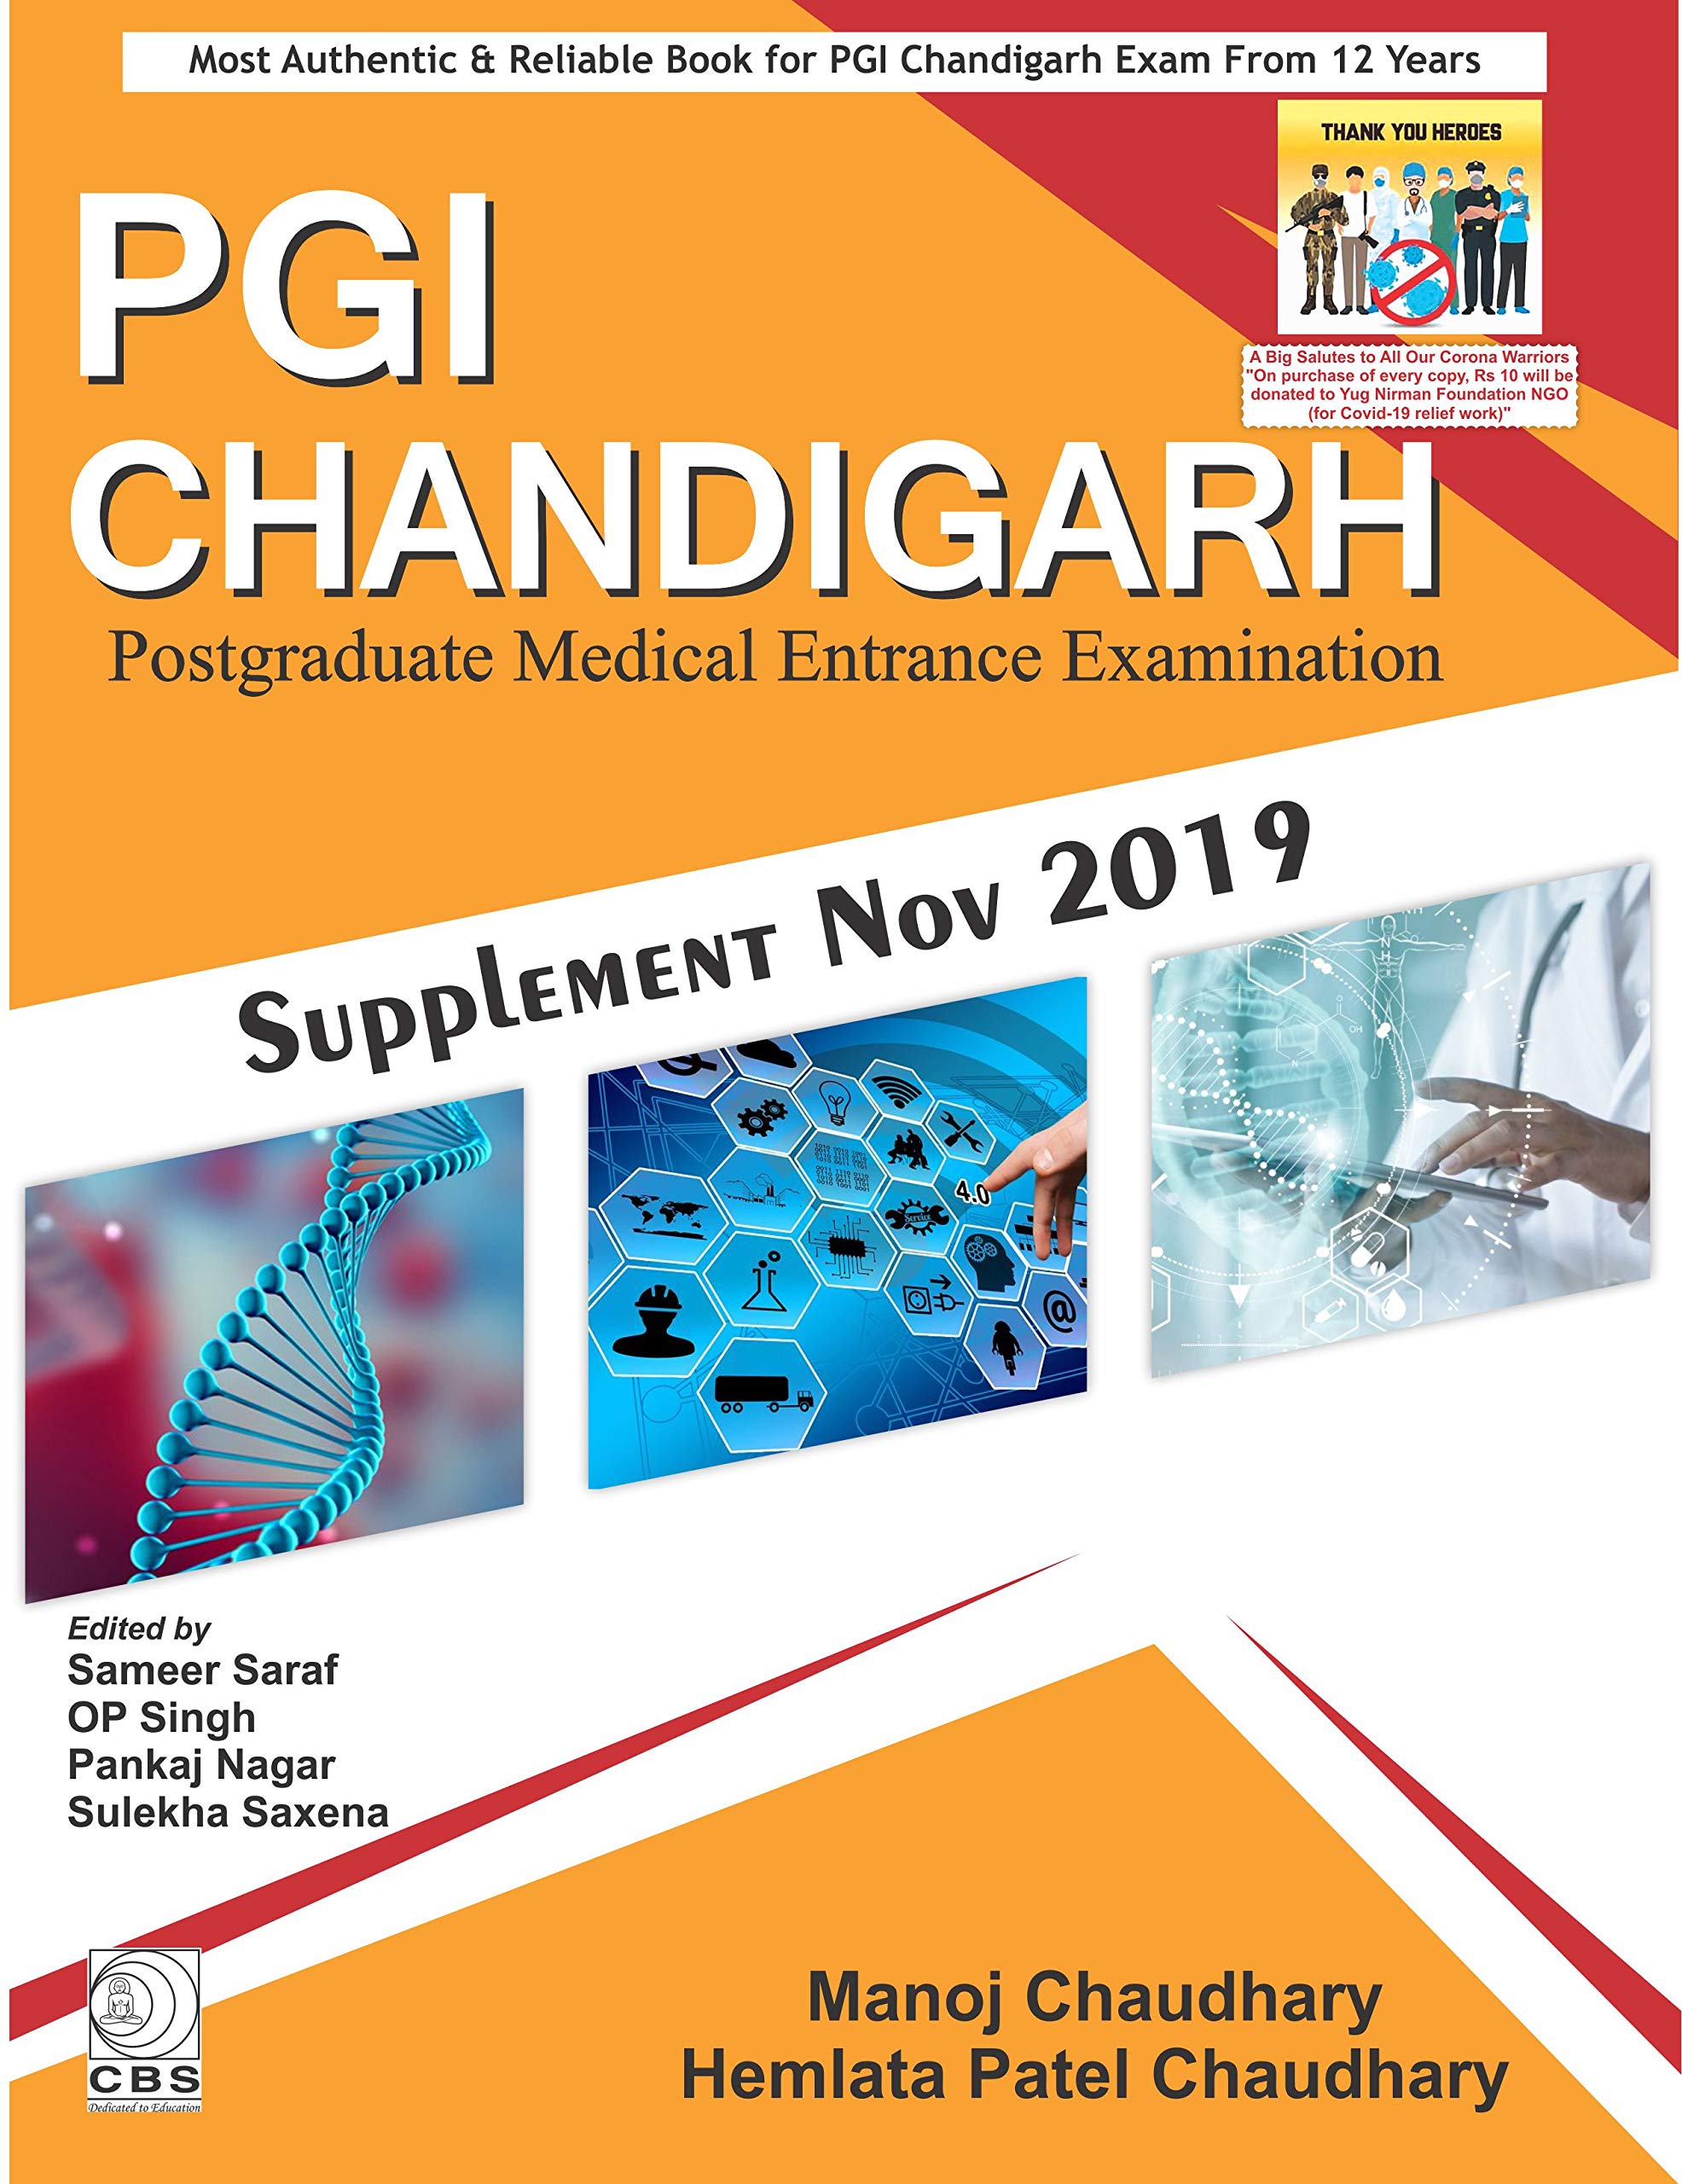 PGI Chandigarh Postgraduate Medical Entrance Examination Supplement Nov 2019 (Pb 2019)